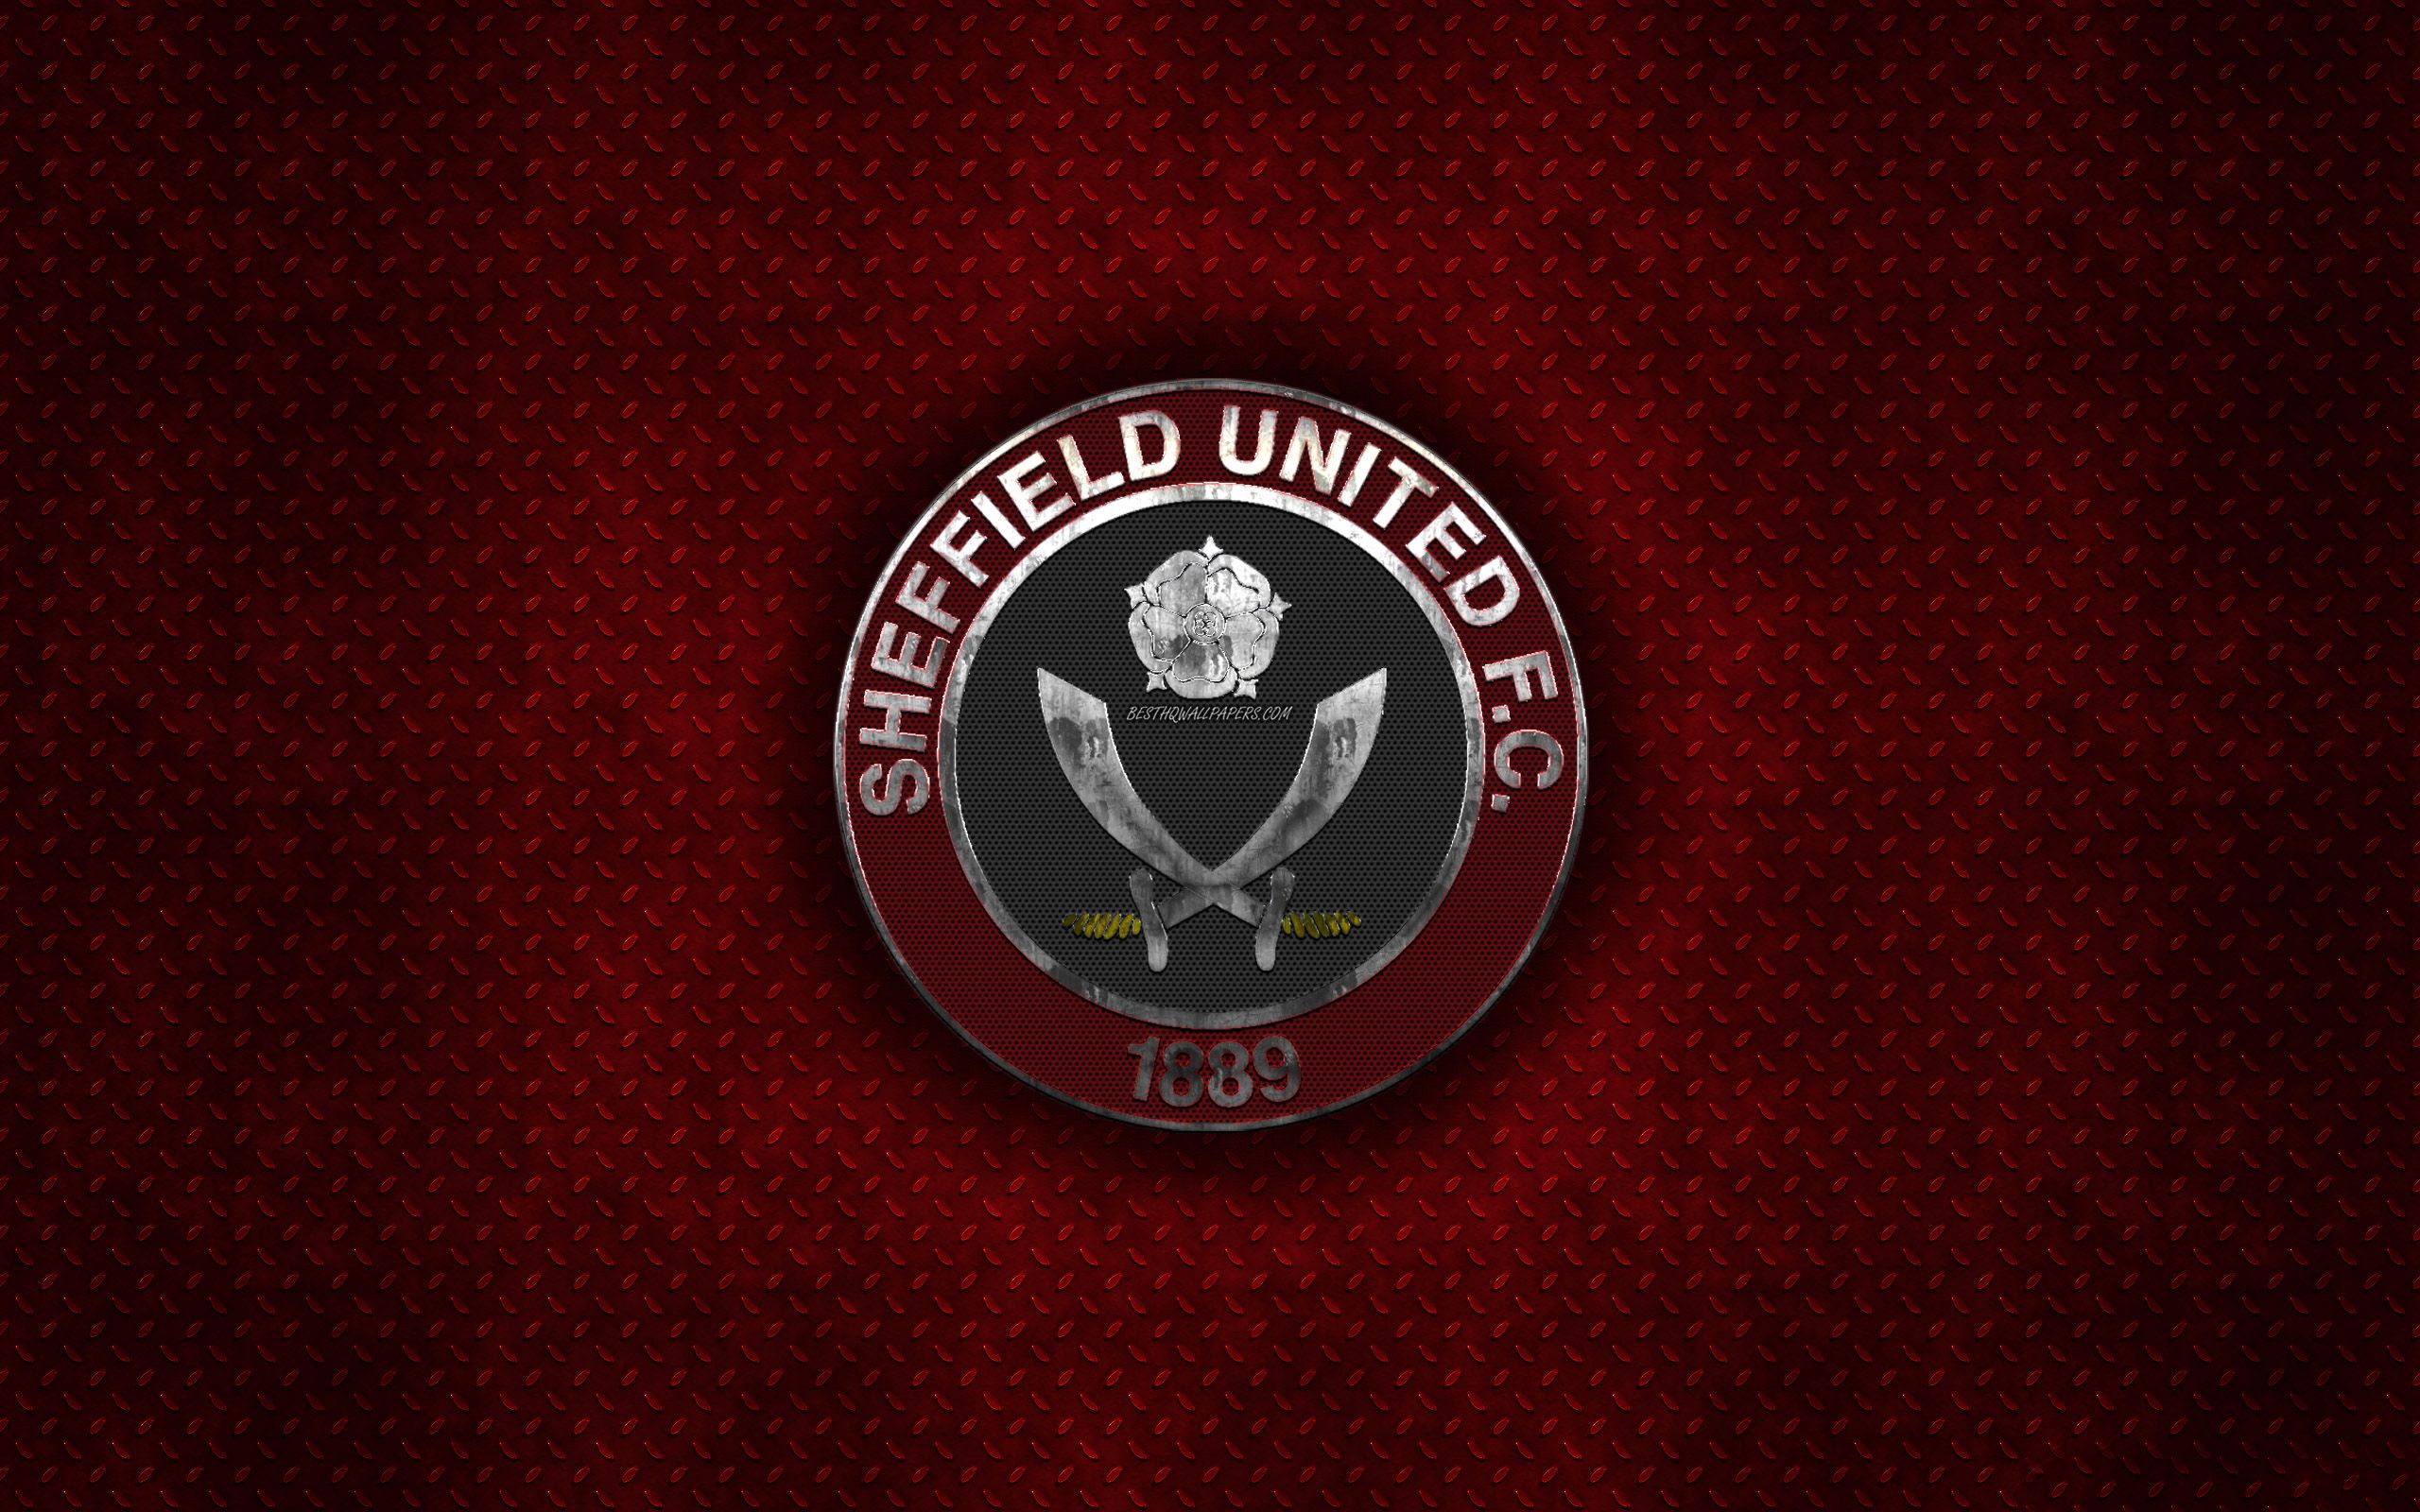 Download wallpaper Sheffield United FC, English football club